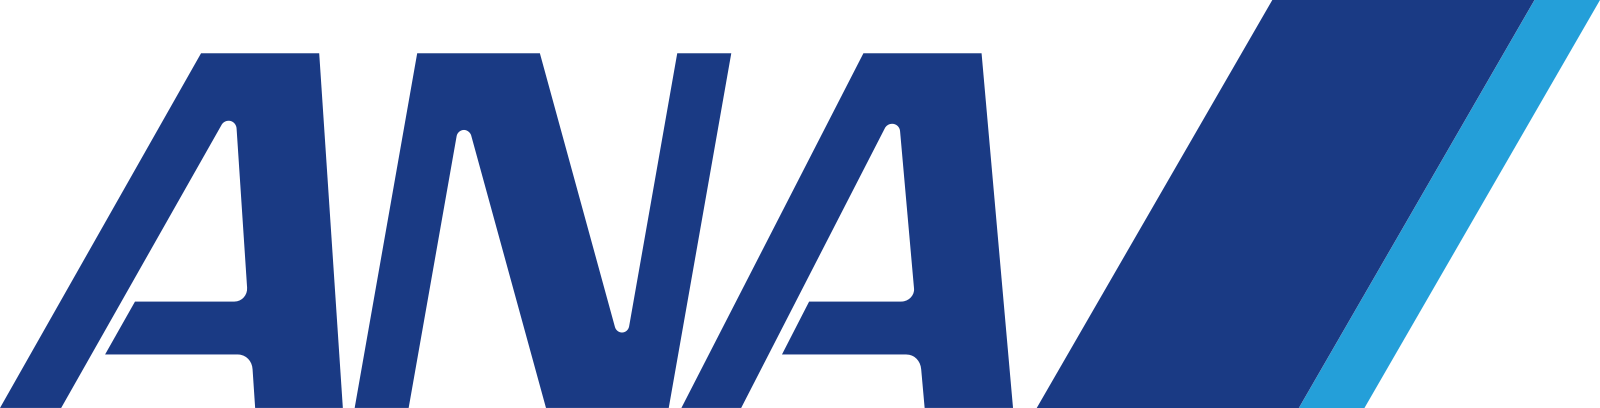 ana logo all all nippon airways 2 - Ana Logo - All Nippon Airways Logo